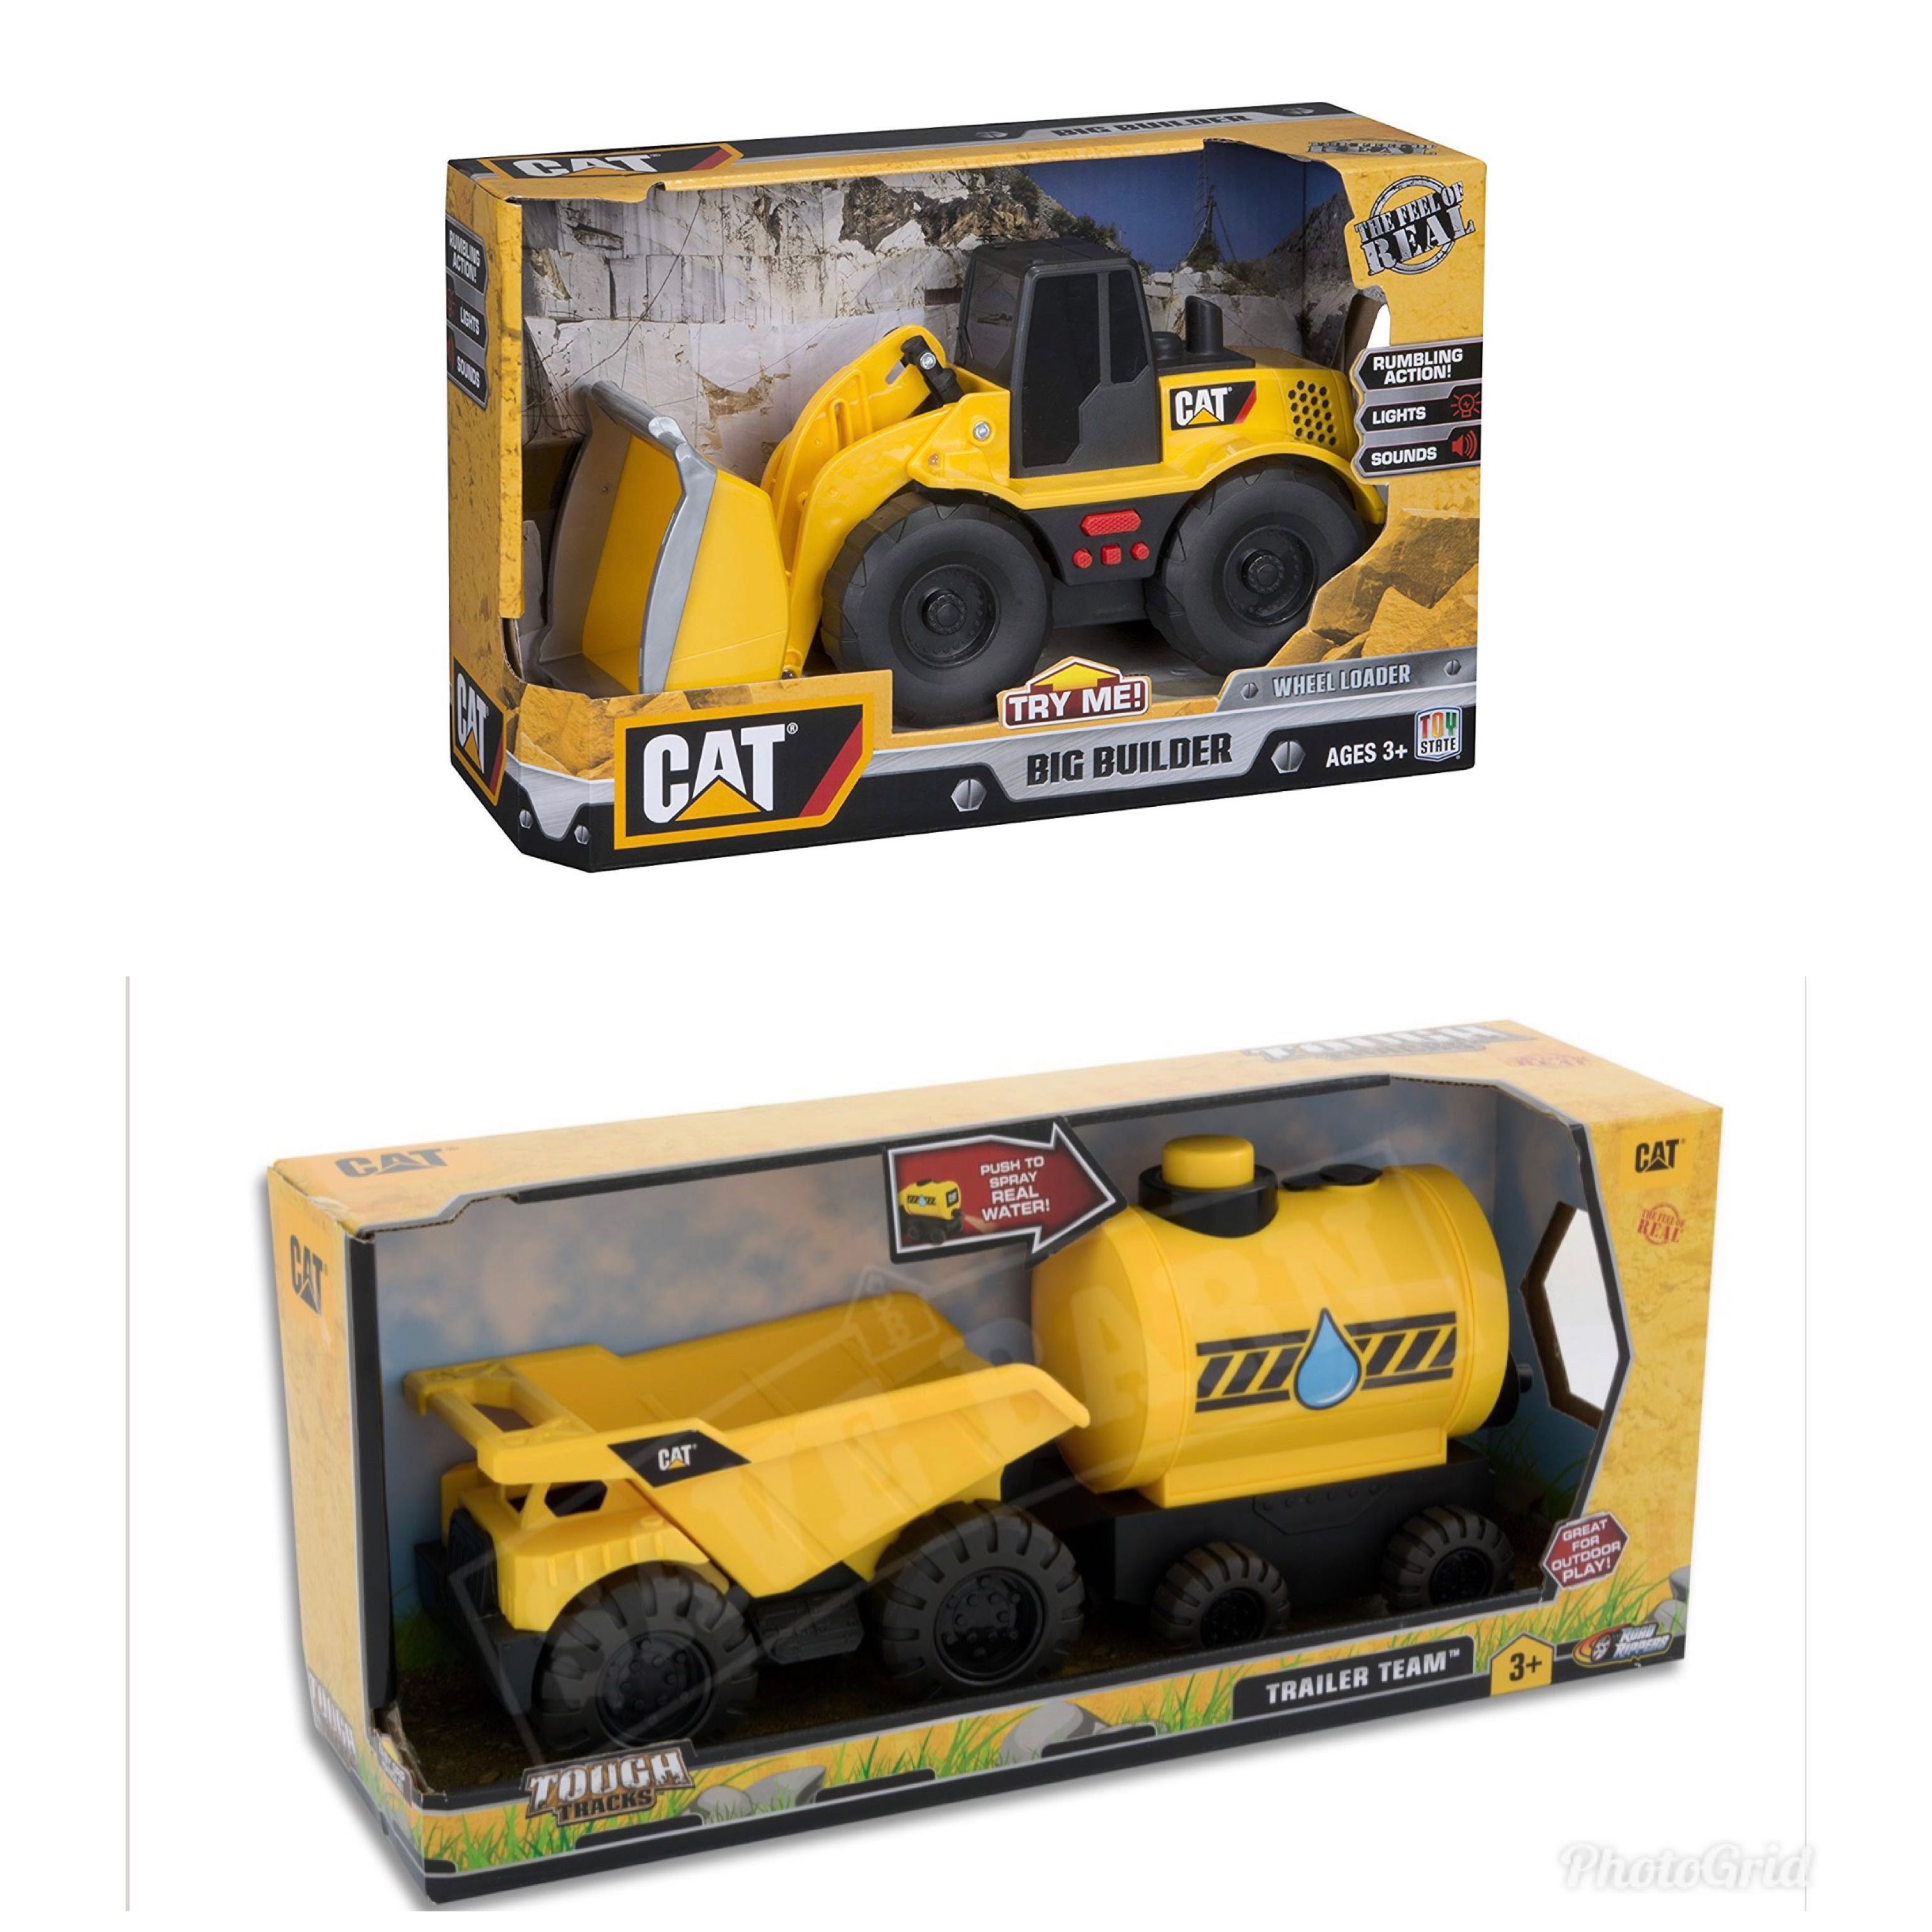 cat brand toy trucks